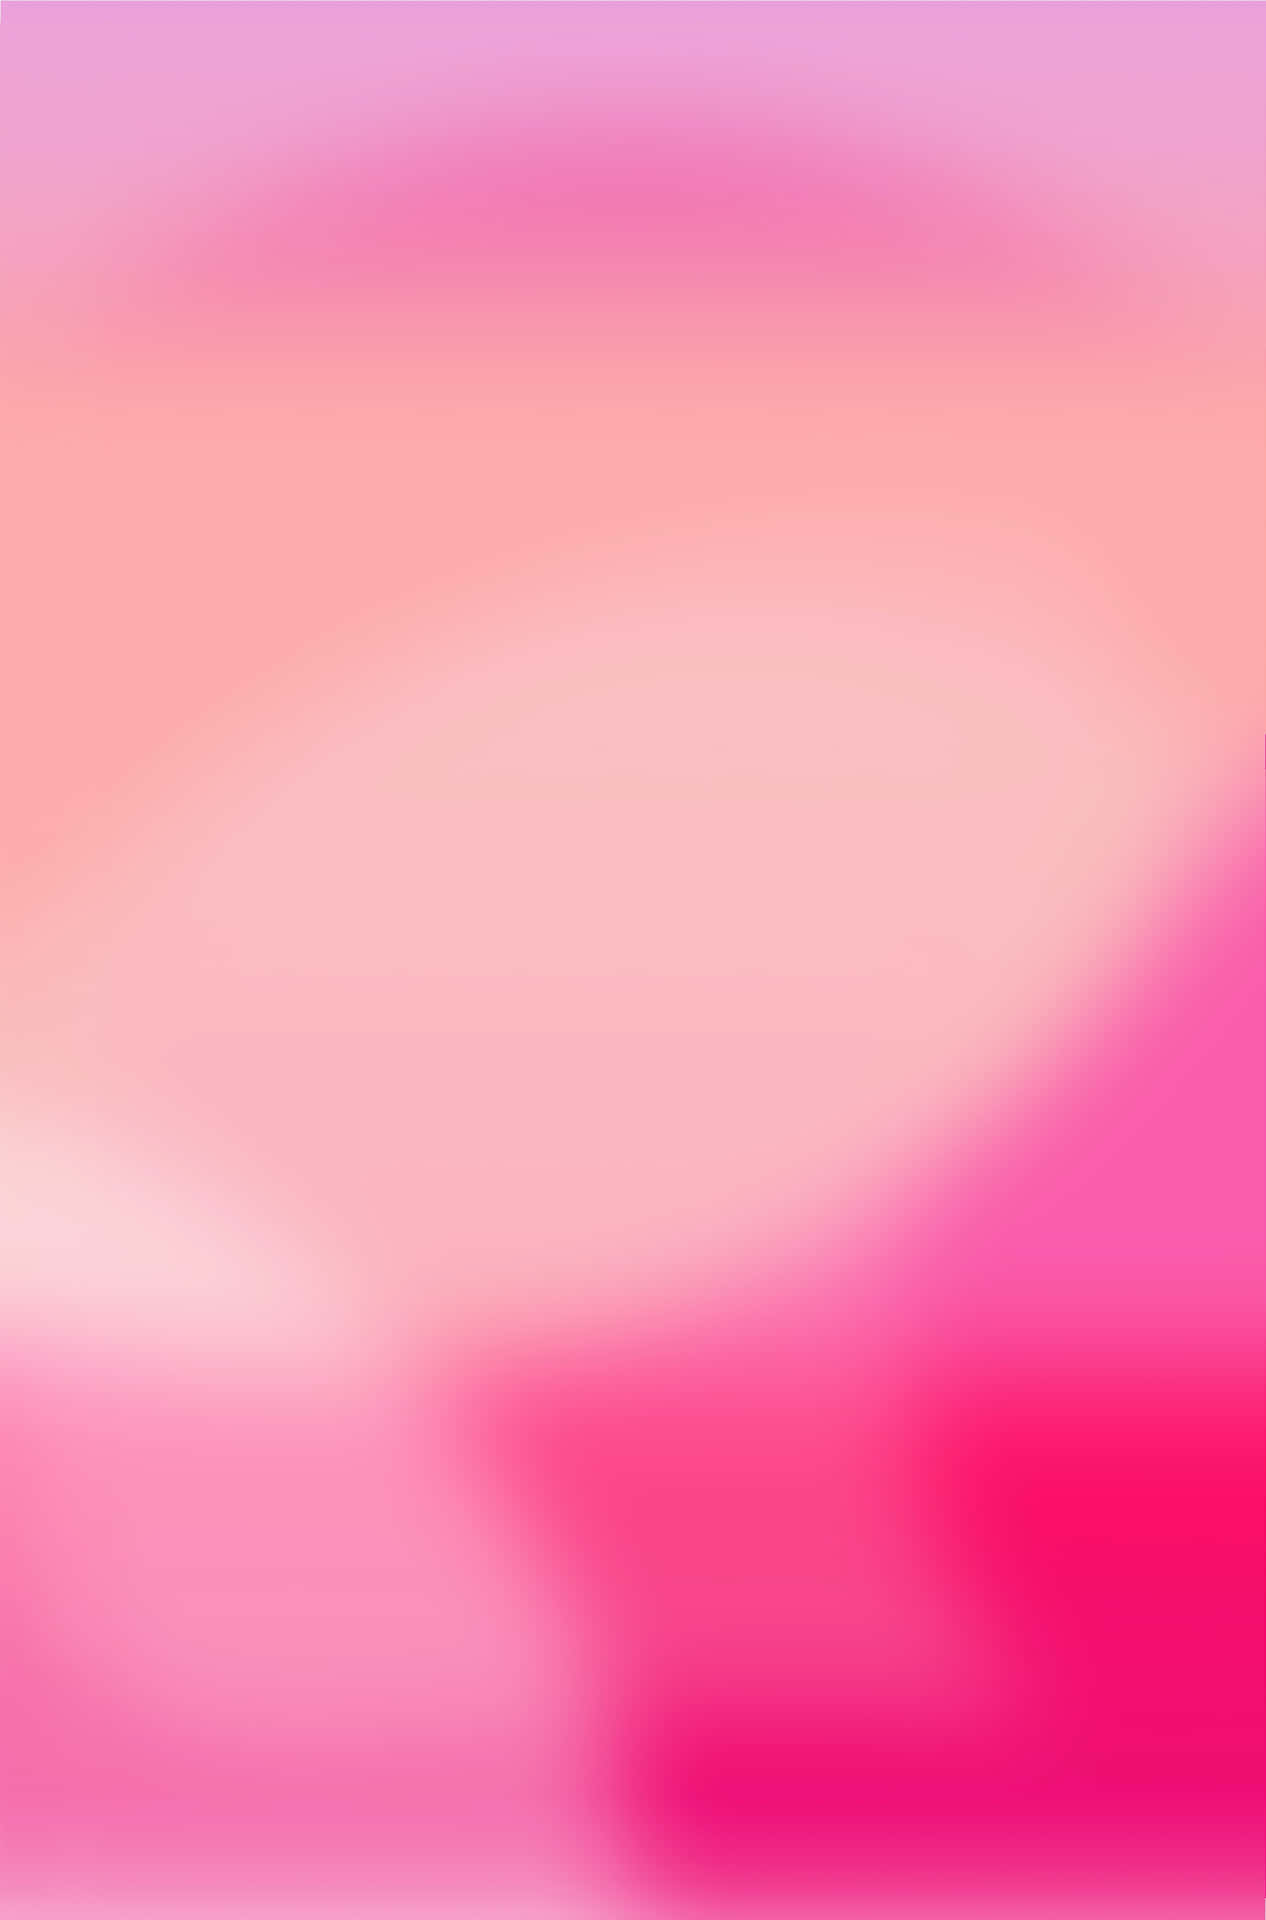 Caption: Elegant Soft Pink Gradient Background